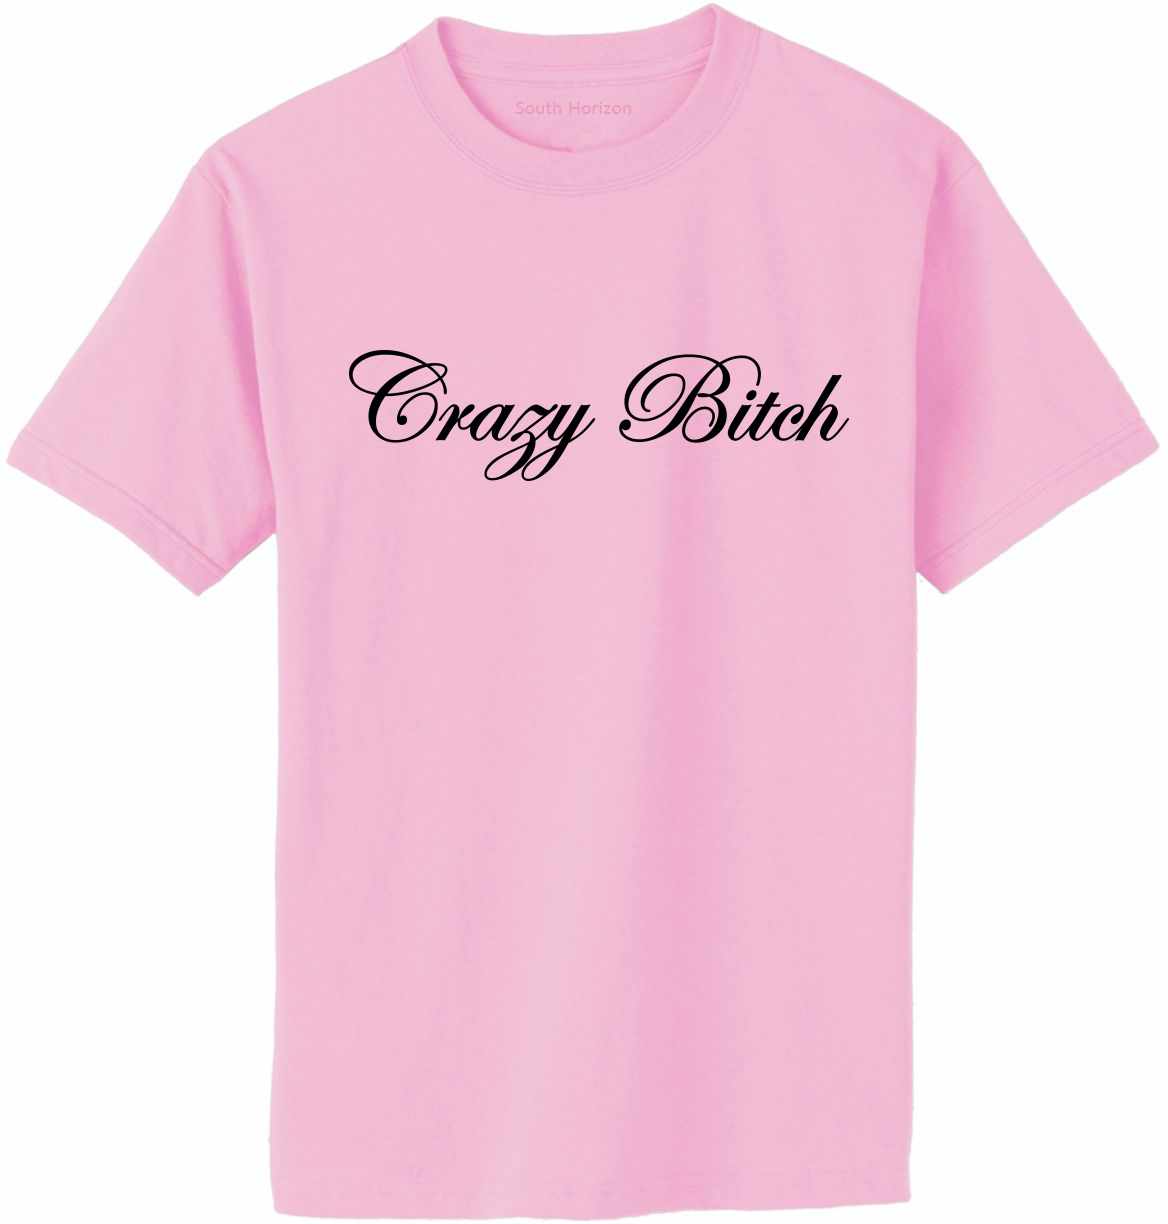 Crazy Bitch Adult T-Shirt (#358-1)